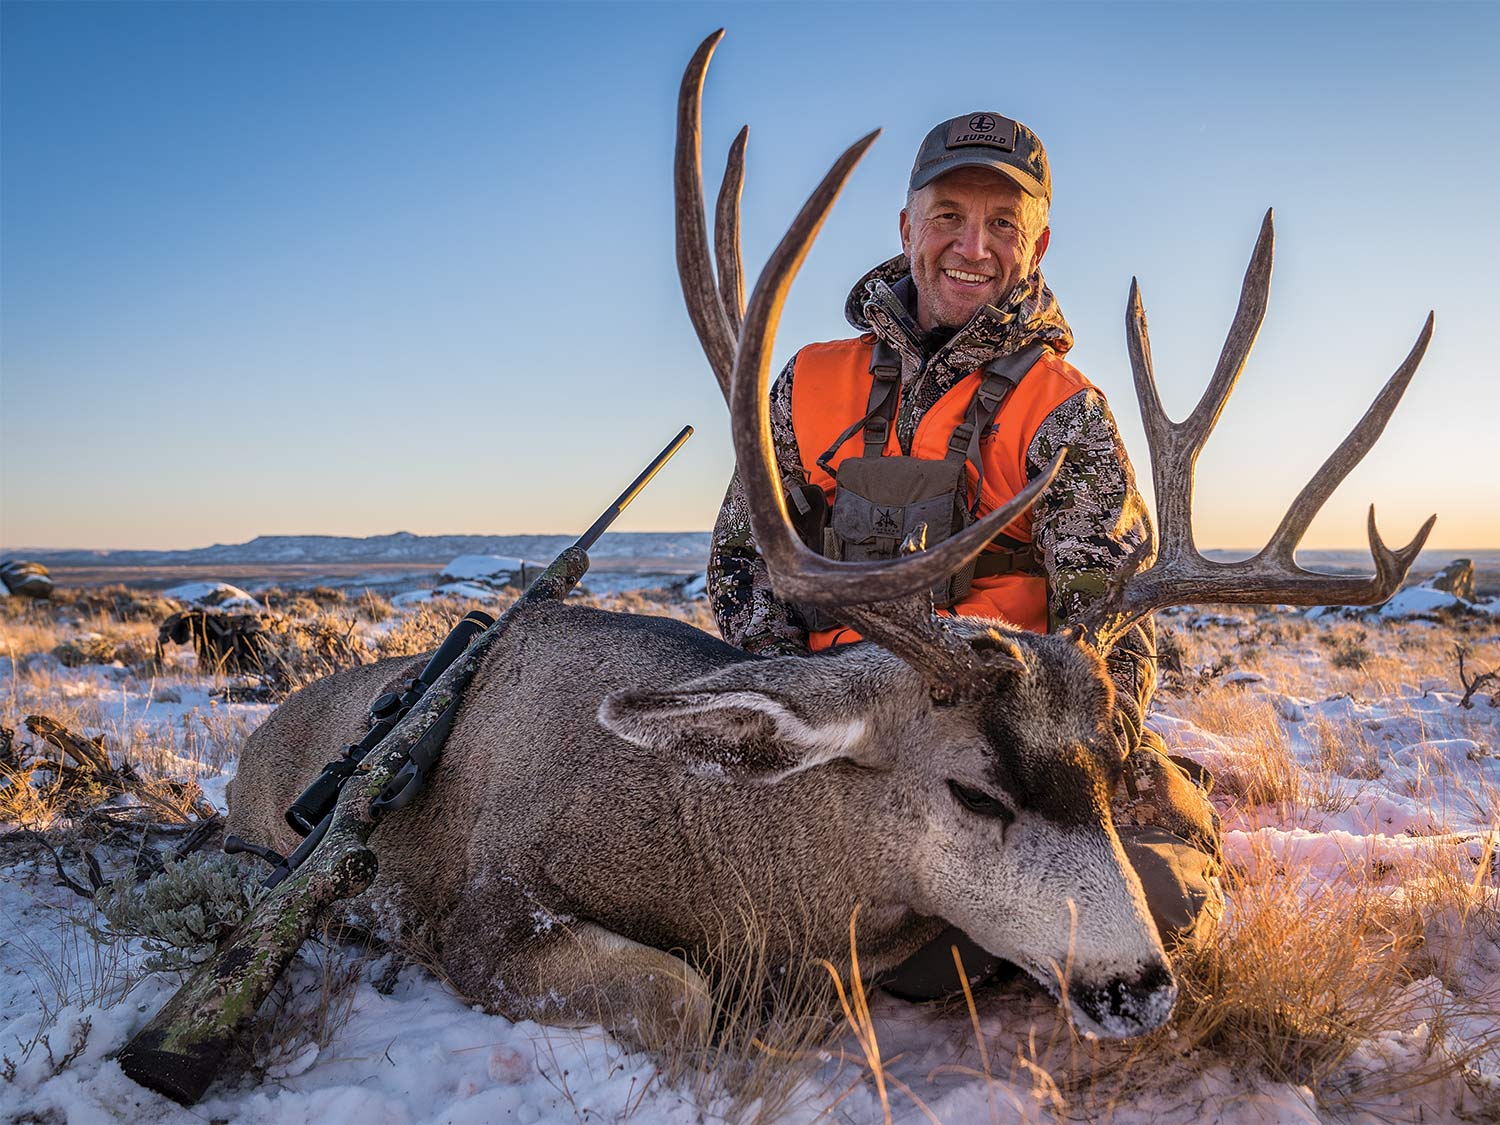 A hunter smiles and kneels behind a large mule deer in the snow.